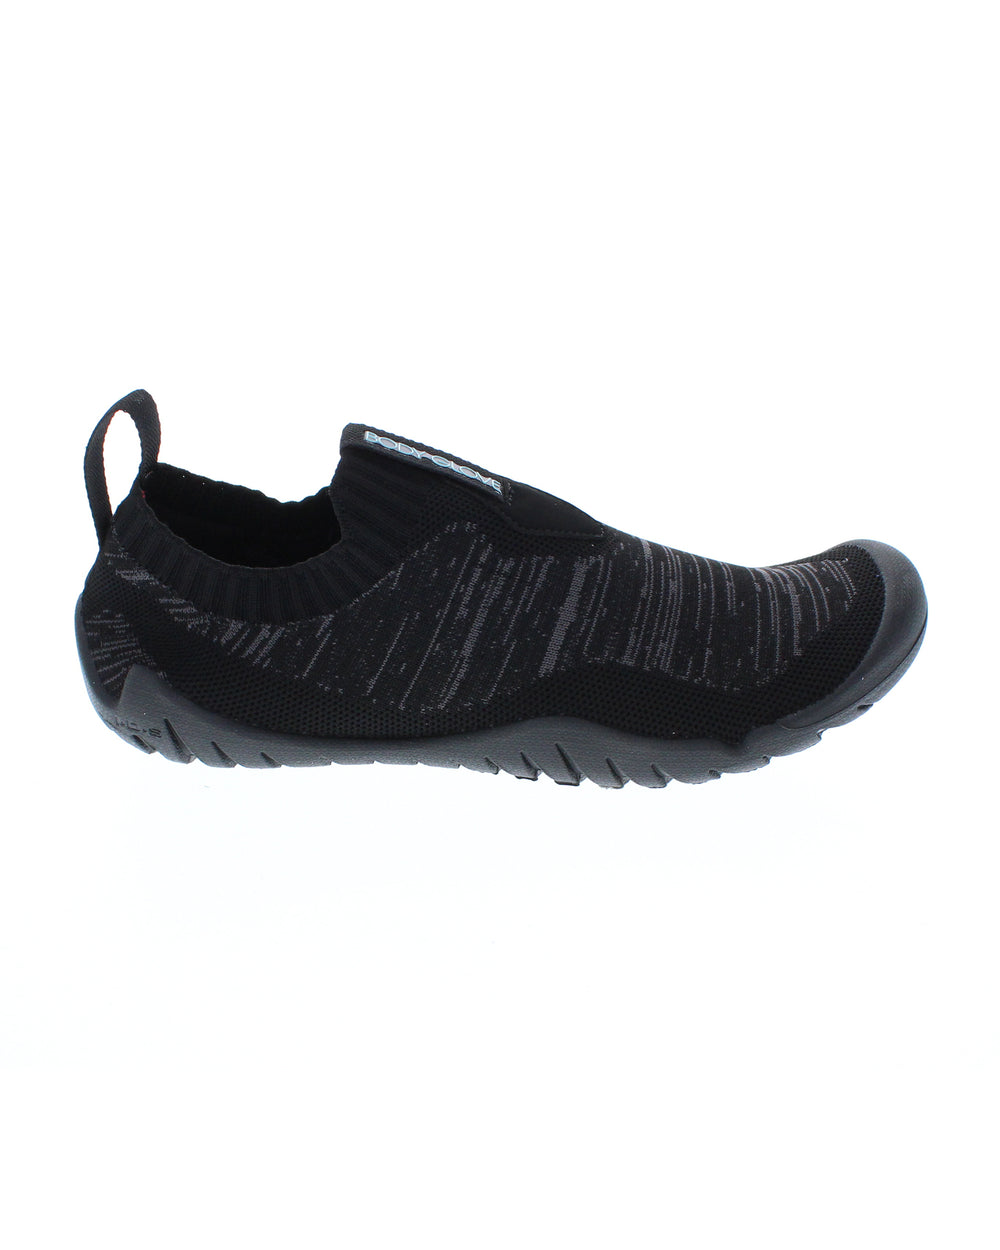 Women's Hydro Knit Siphon Water Shoes - Black/Aqua